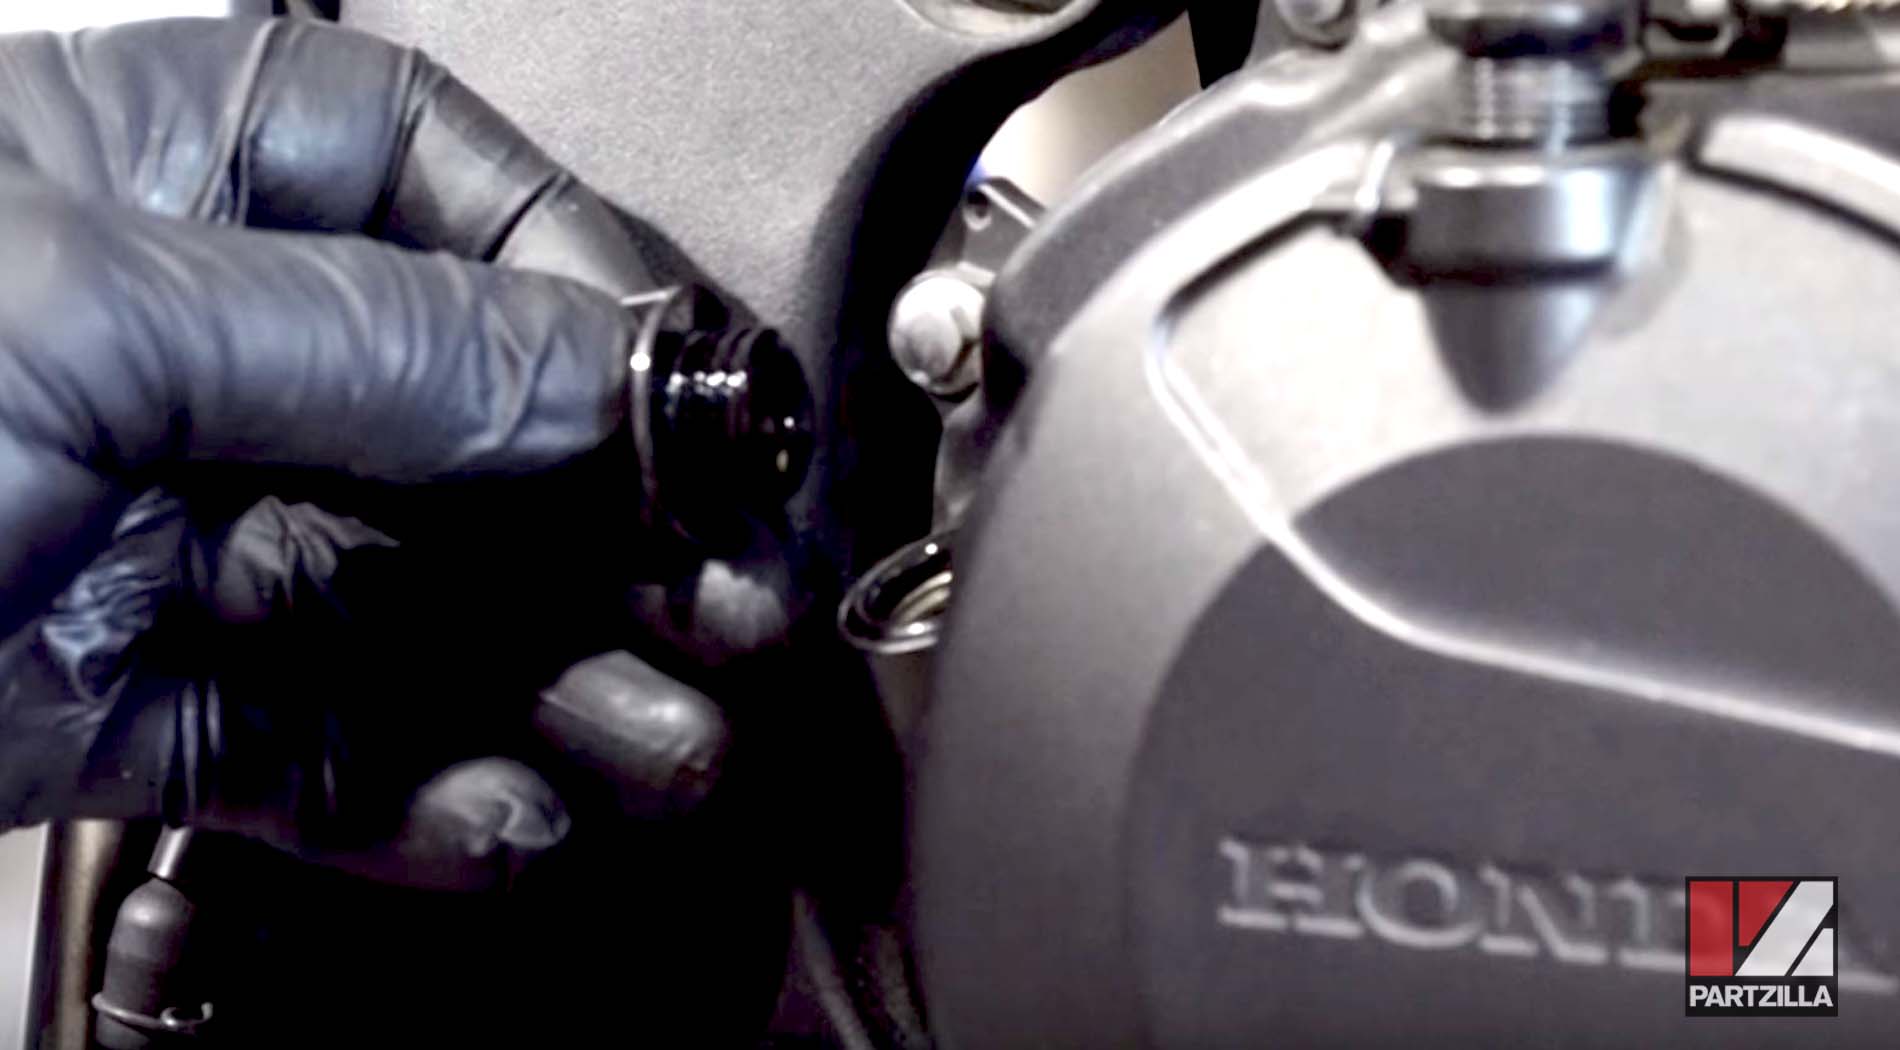 Honda CBR600RR oil change service